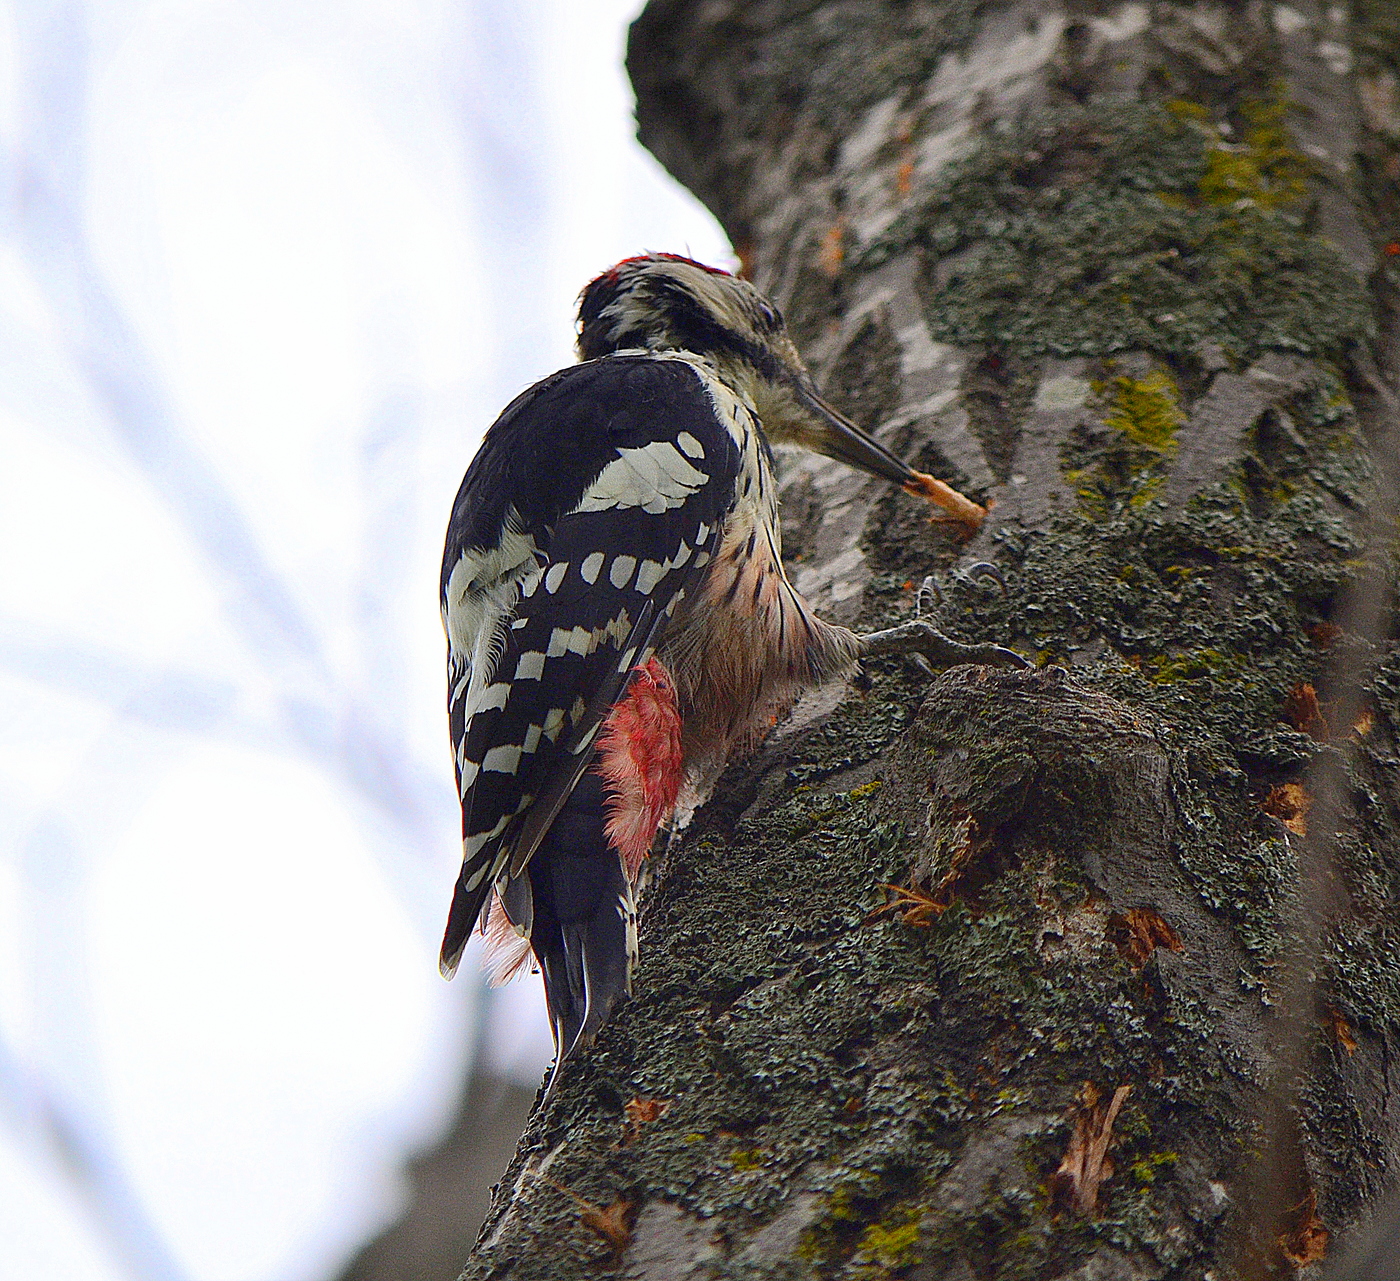 Woodpecker with prey